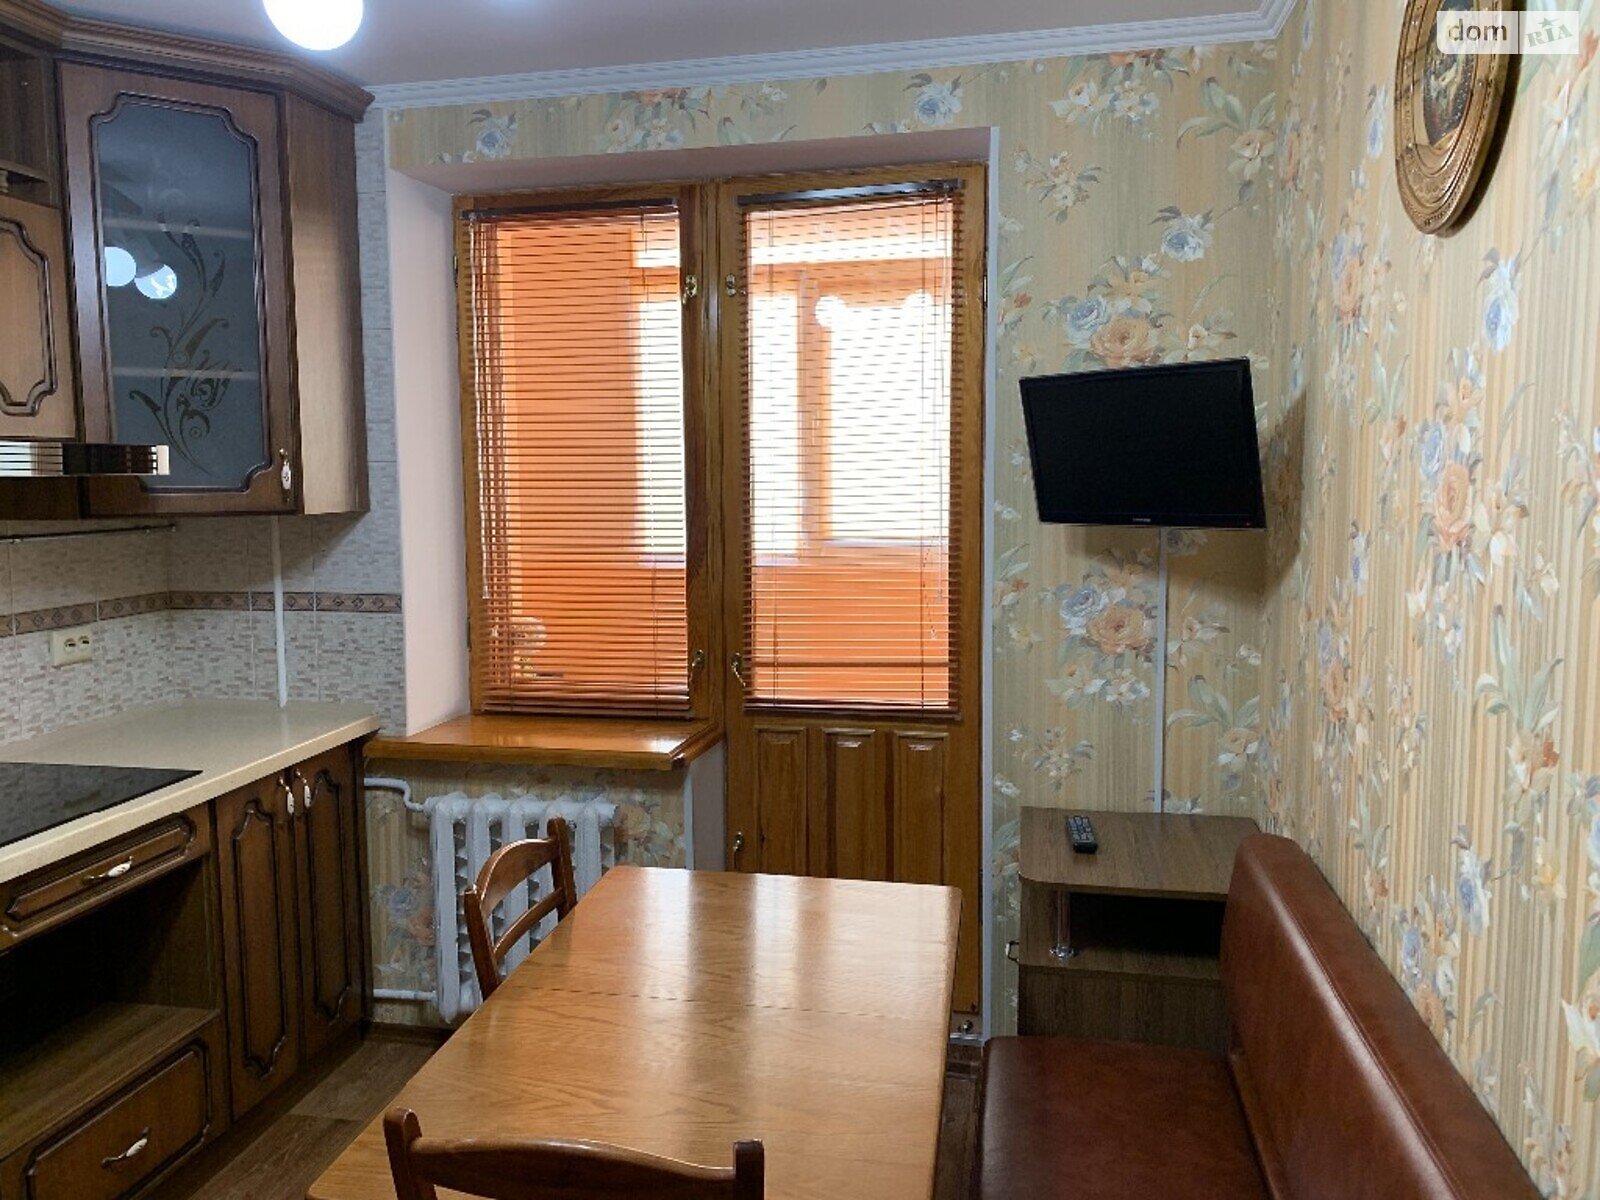 Продажа трехкомнатной квартиры в Николаеве, на Центр Садова, район Центр фото 1